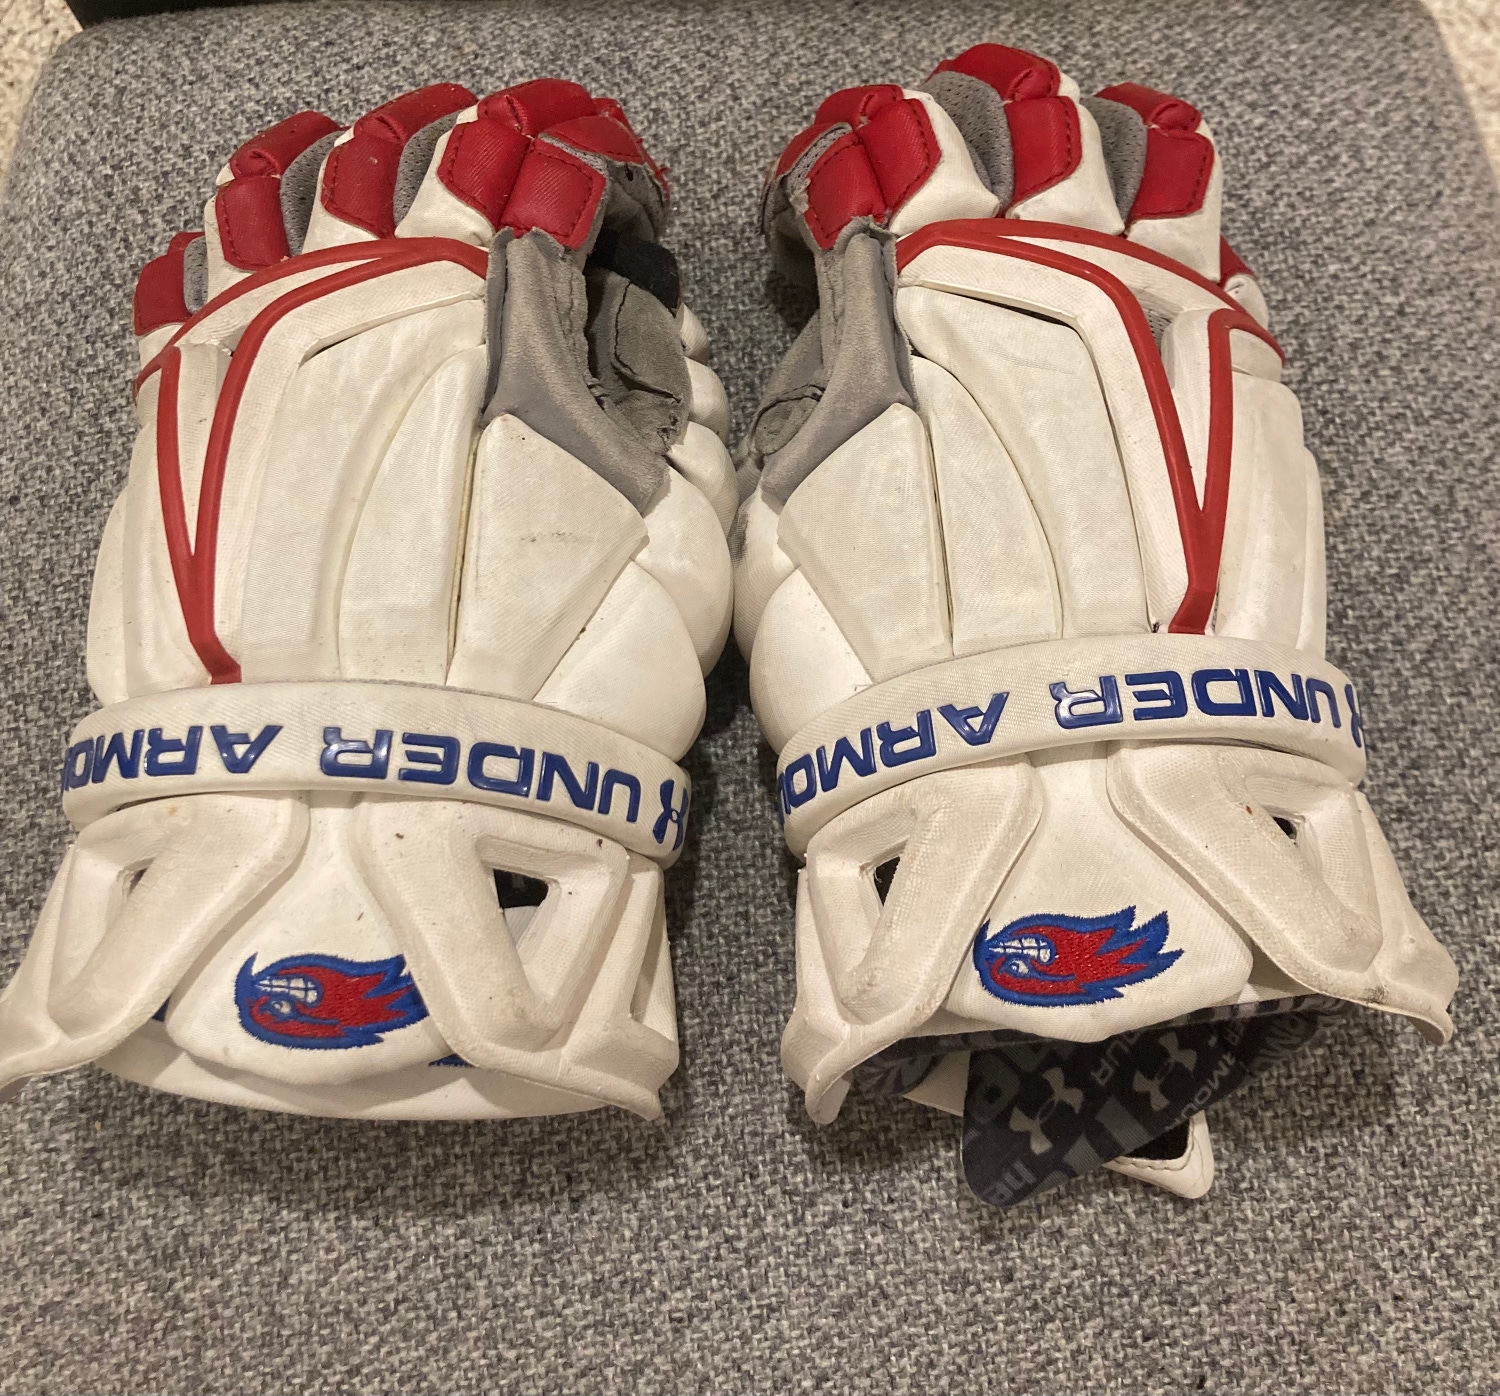 Used UMASS LOWELL Under Armour Goalie Lacrosse Gloves 13"